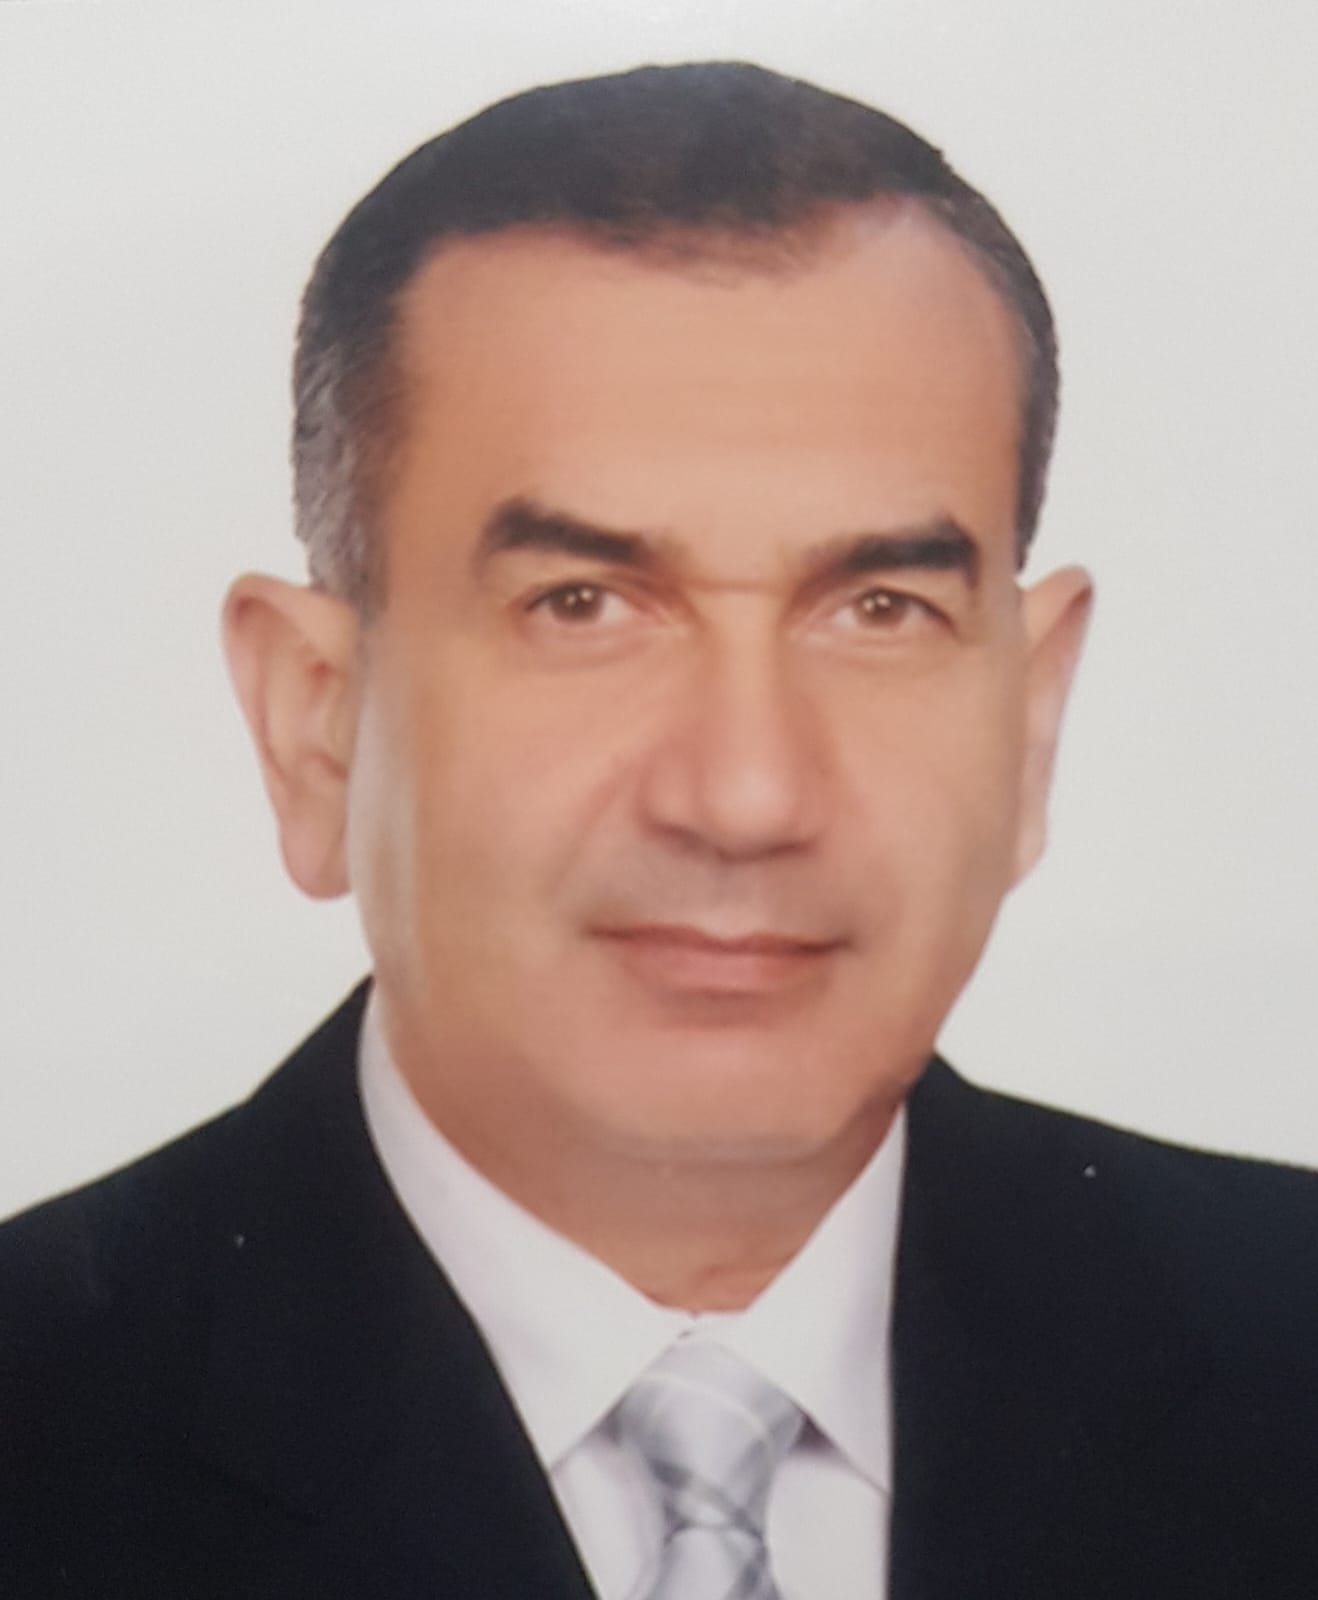 Dr. Sameh Saad Eddin